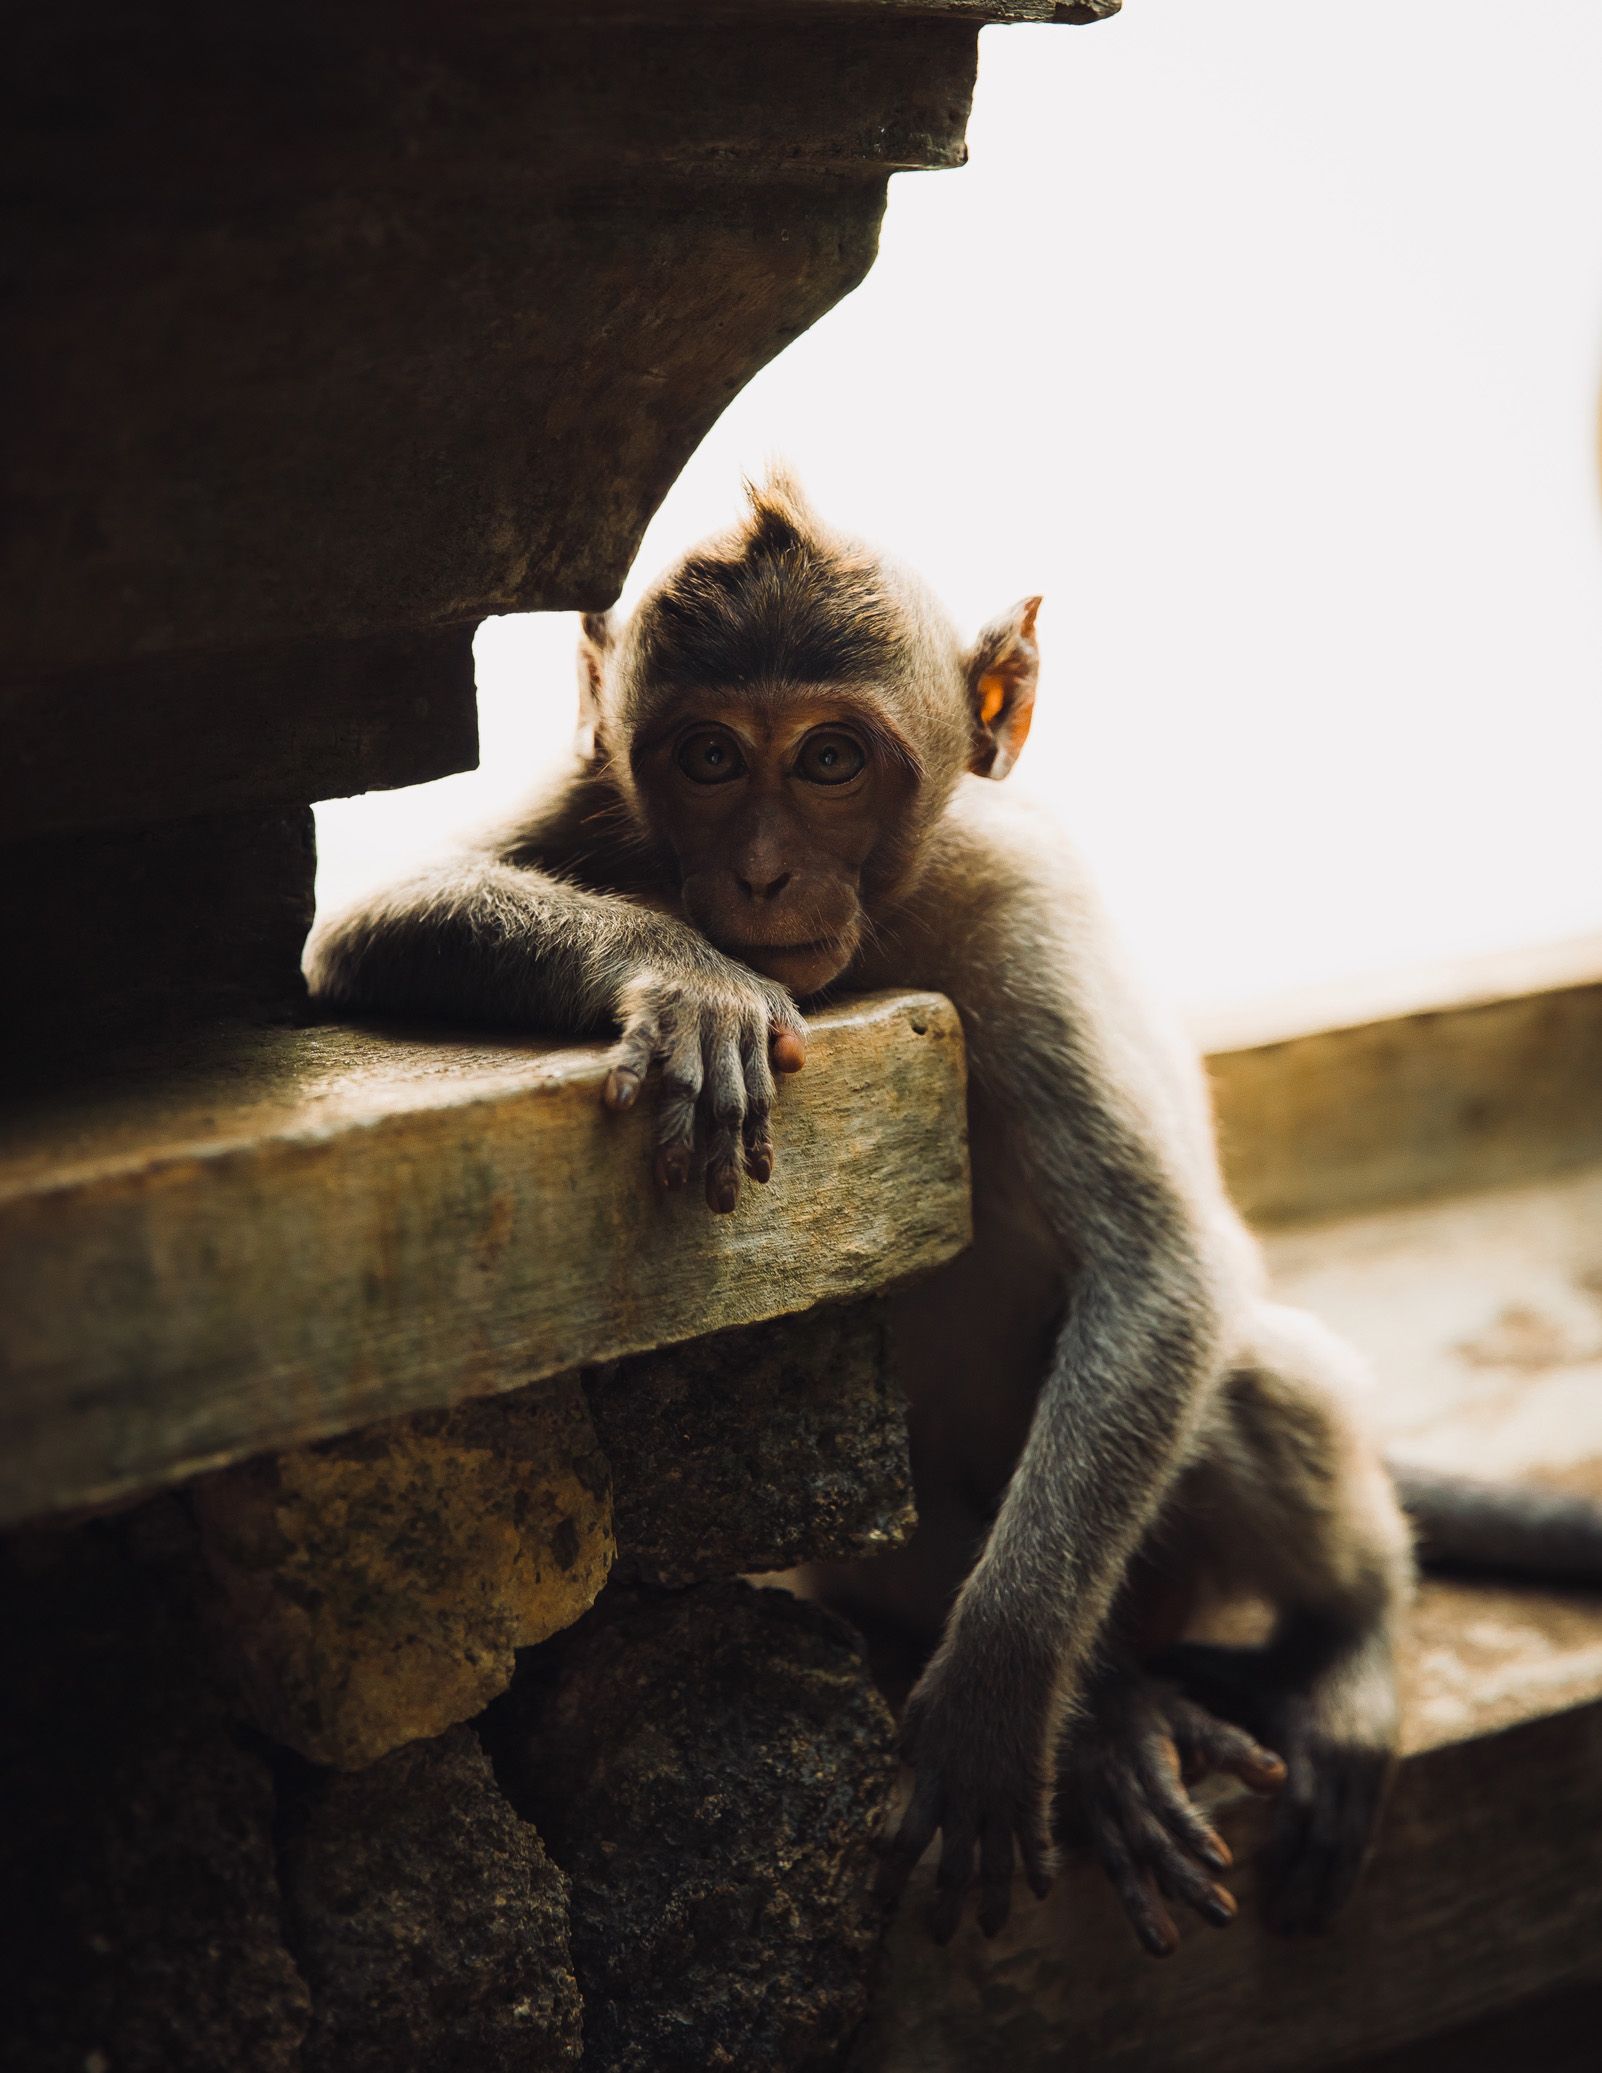 5è Premi Viatges: "Una mirada penetrant" Bali, Indonesia. Foto: Gonzalo Pasquier